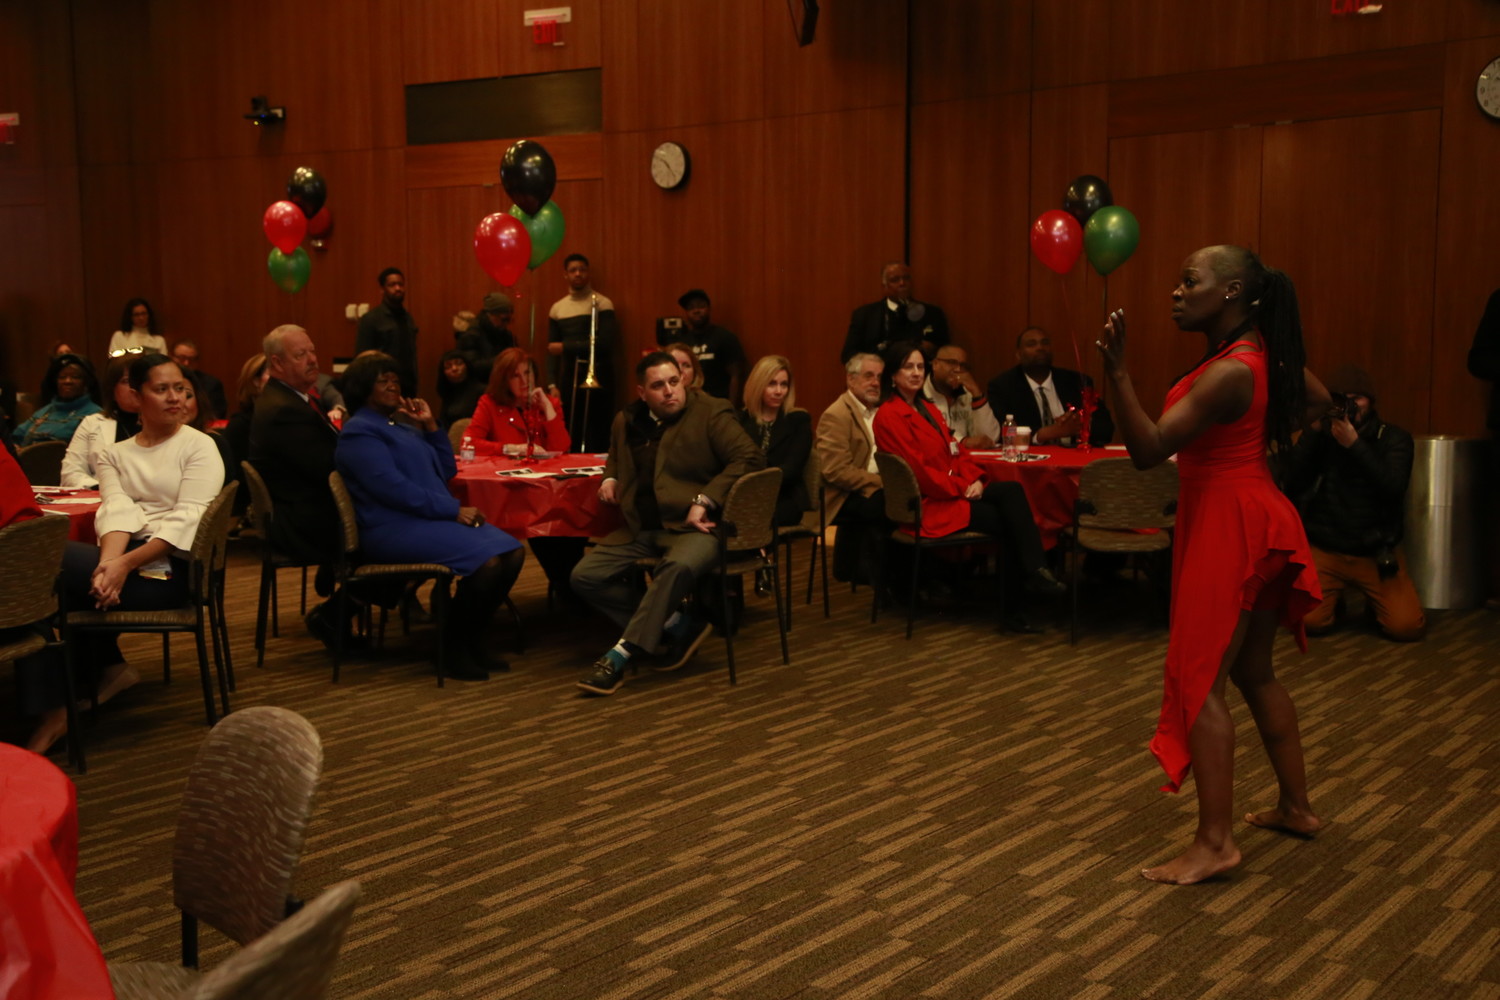 Tijuana Evans performed an interpretive dance at the event.